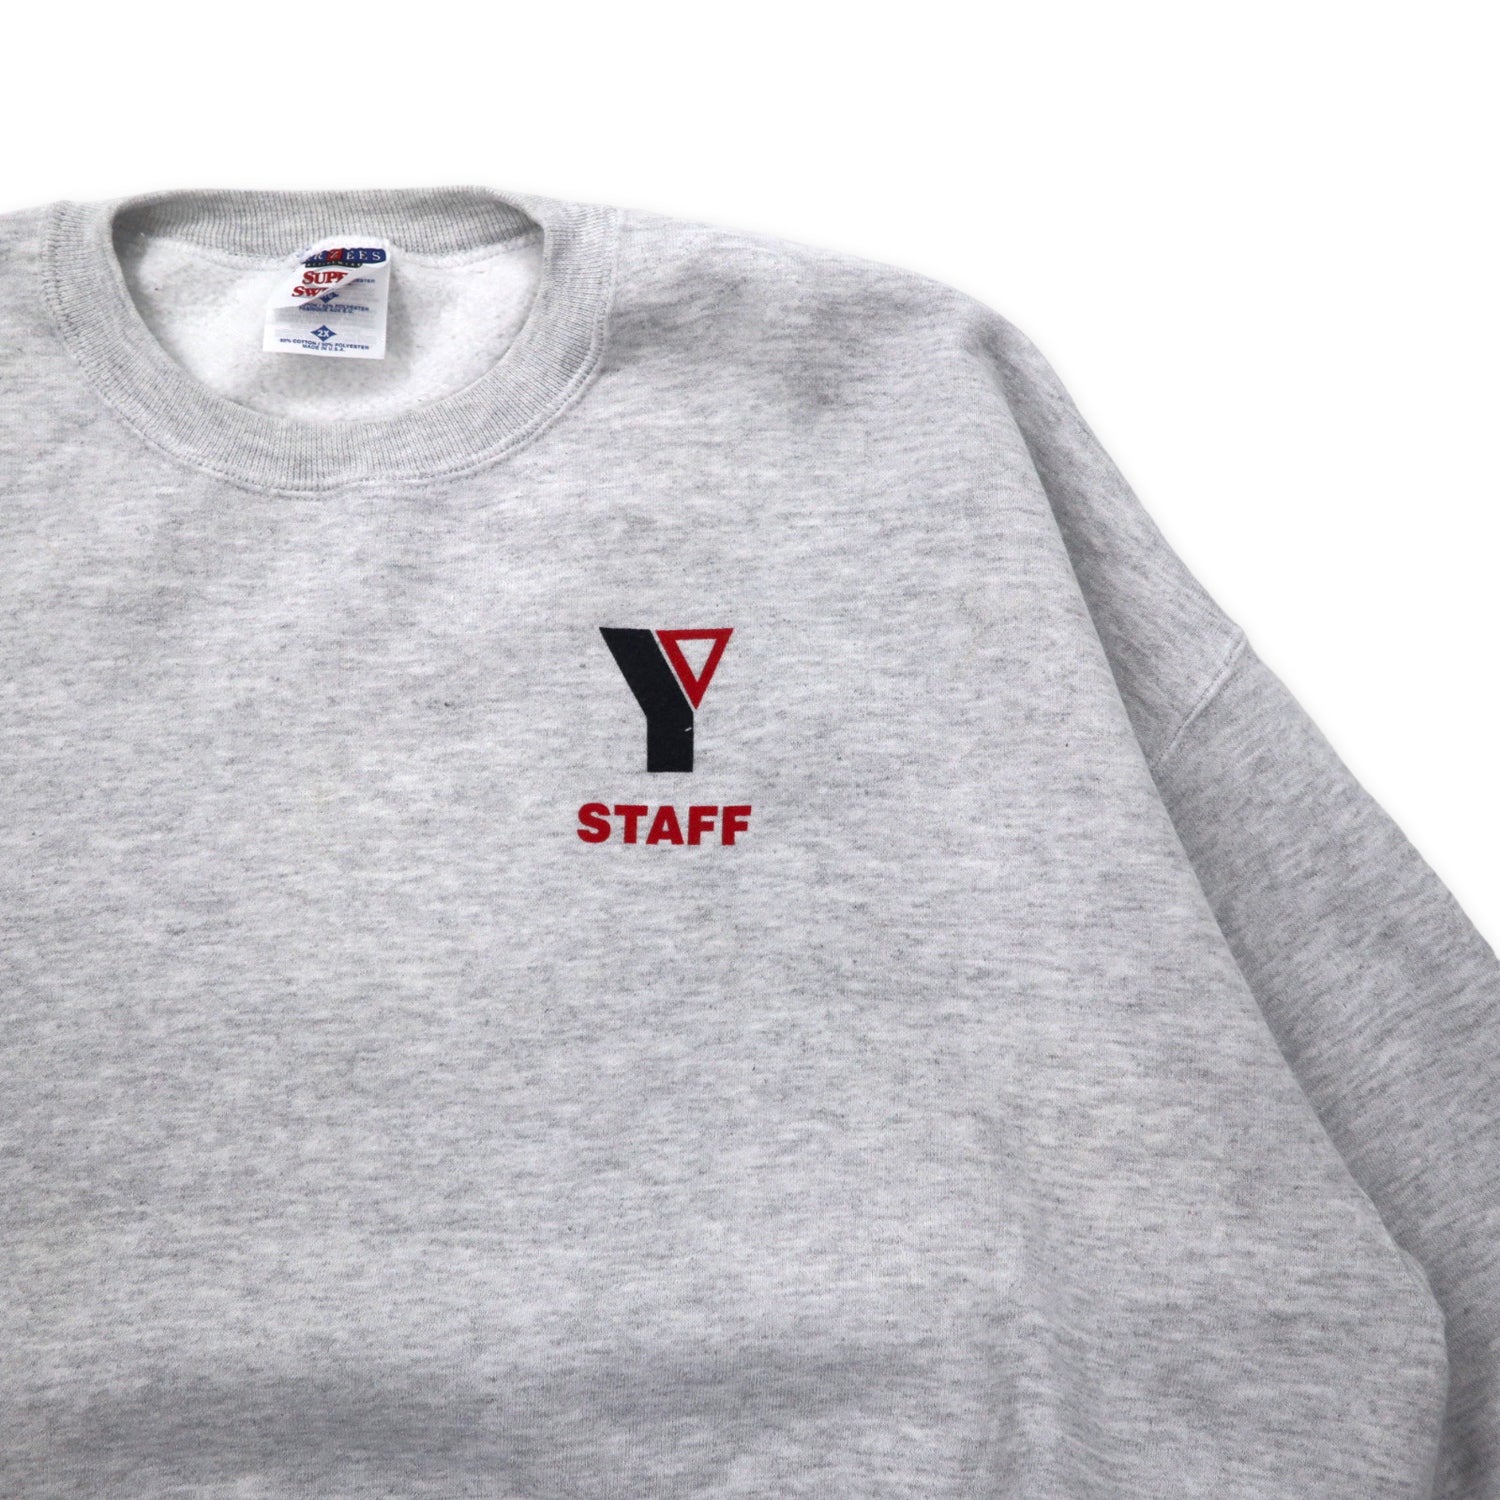 Jerzees Super Sweats USA Made 90's Crewneck Sweatshirt 2X Gray 